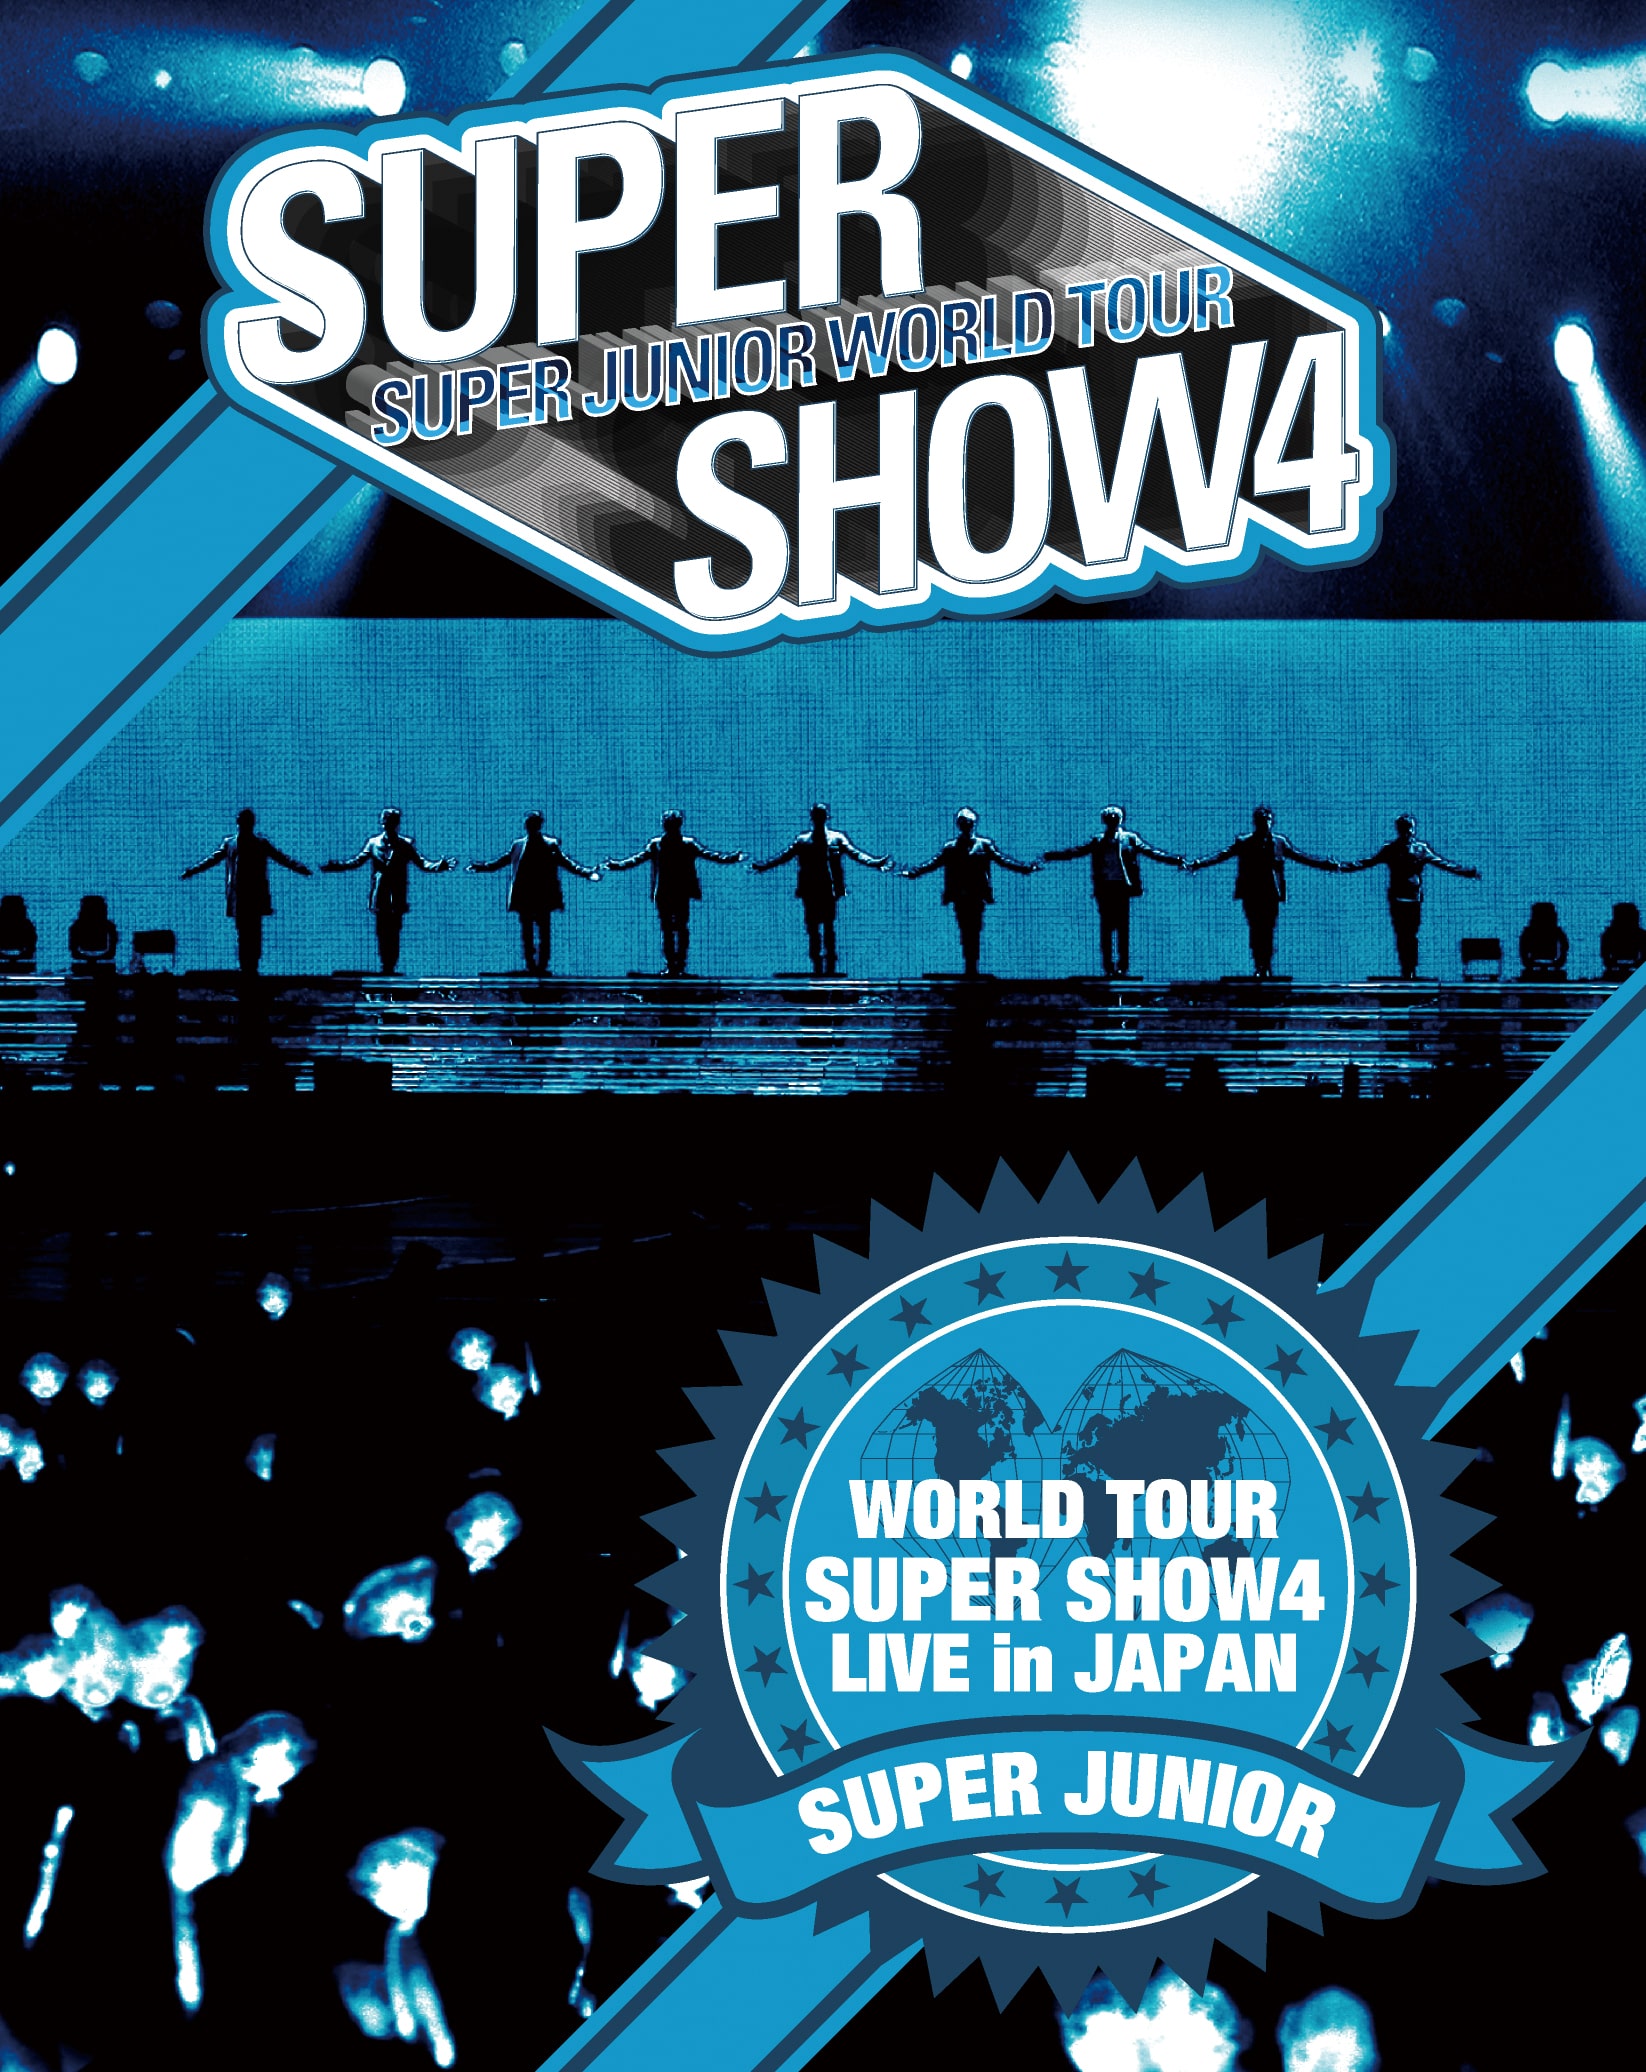 SUPER JUNIOR「SUPER JUNIOR WORLD TOUR SUPER SHOW4 LIVE in JAPAN